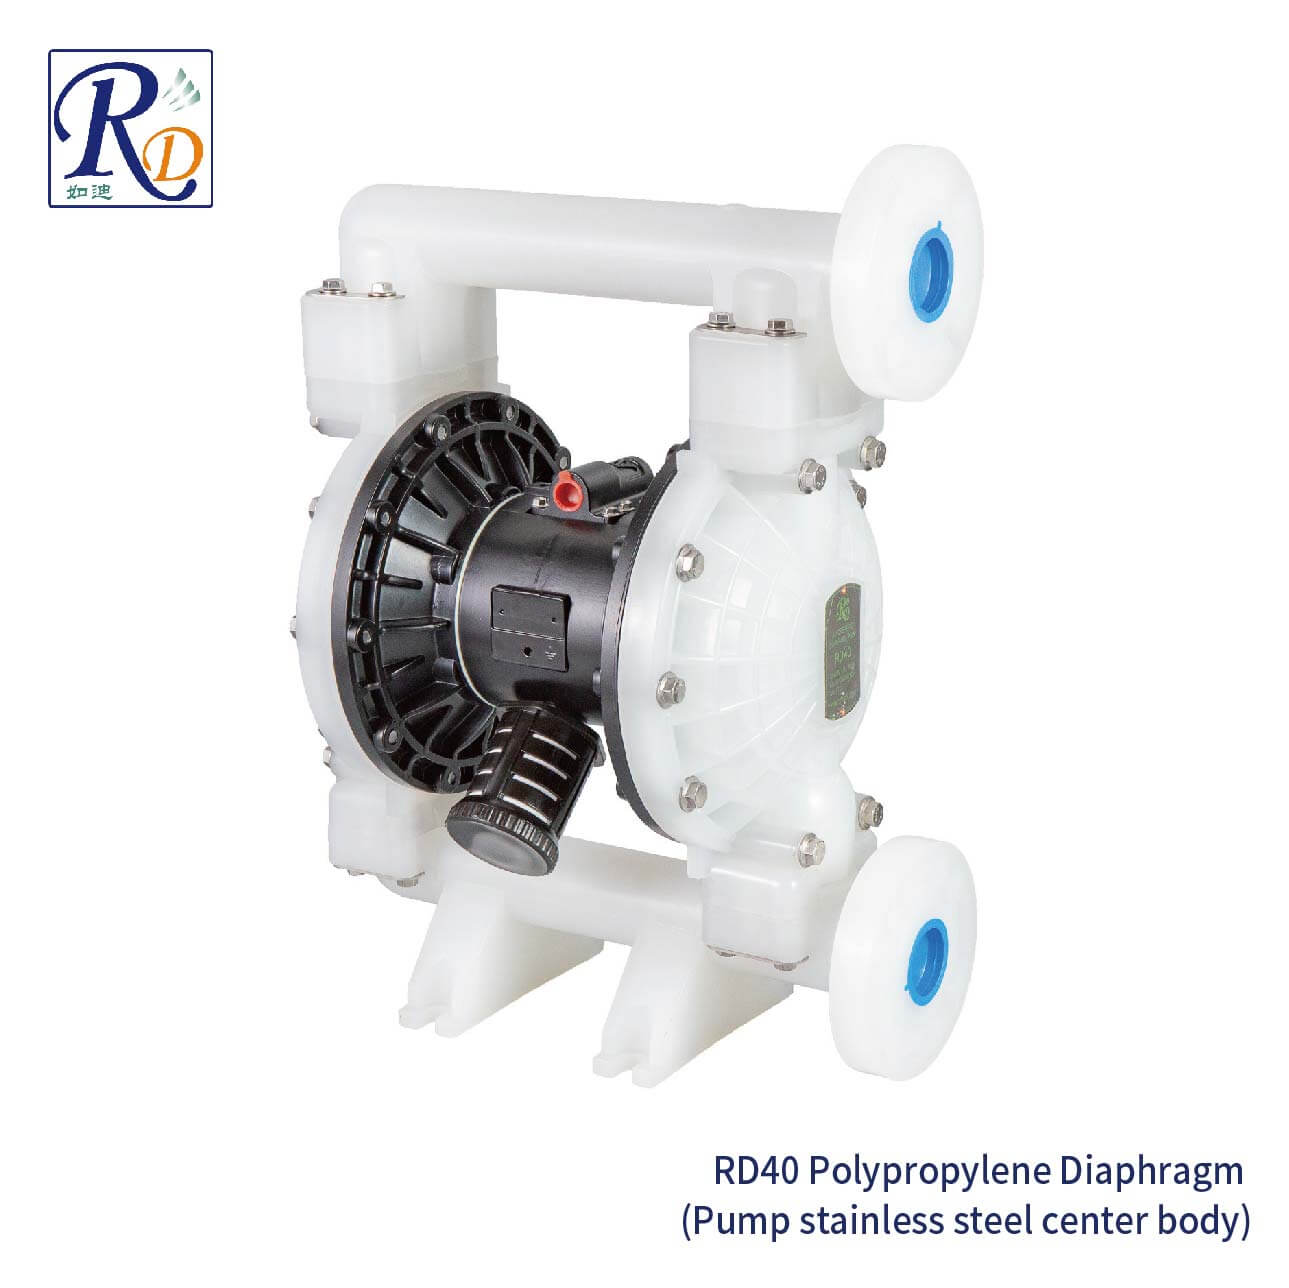 RD40 Polypropylene Diaphragm Pump